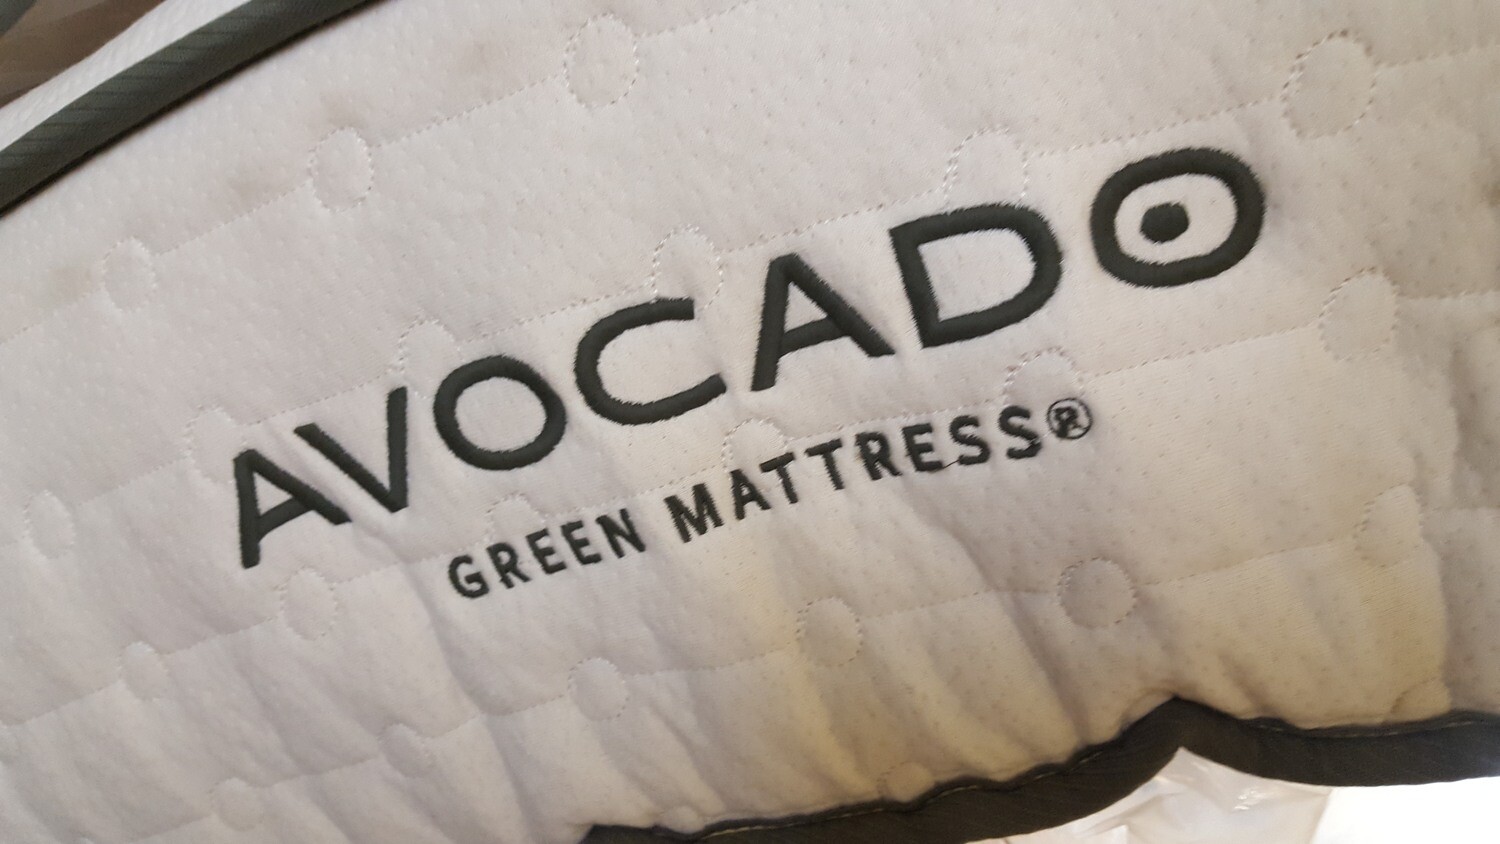 Avocado TWIN XL trial mattress (TX0100-0907) #2125